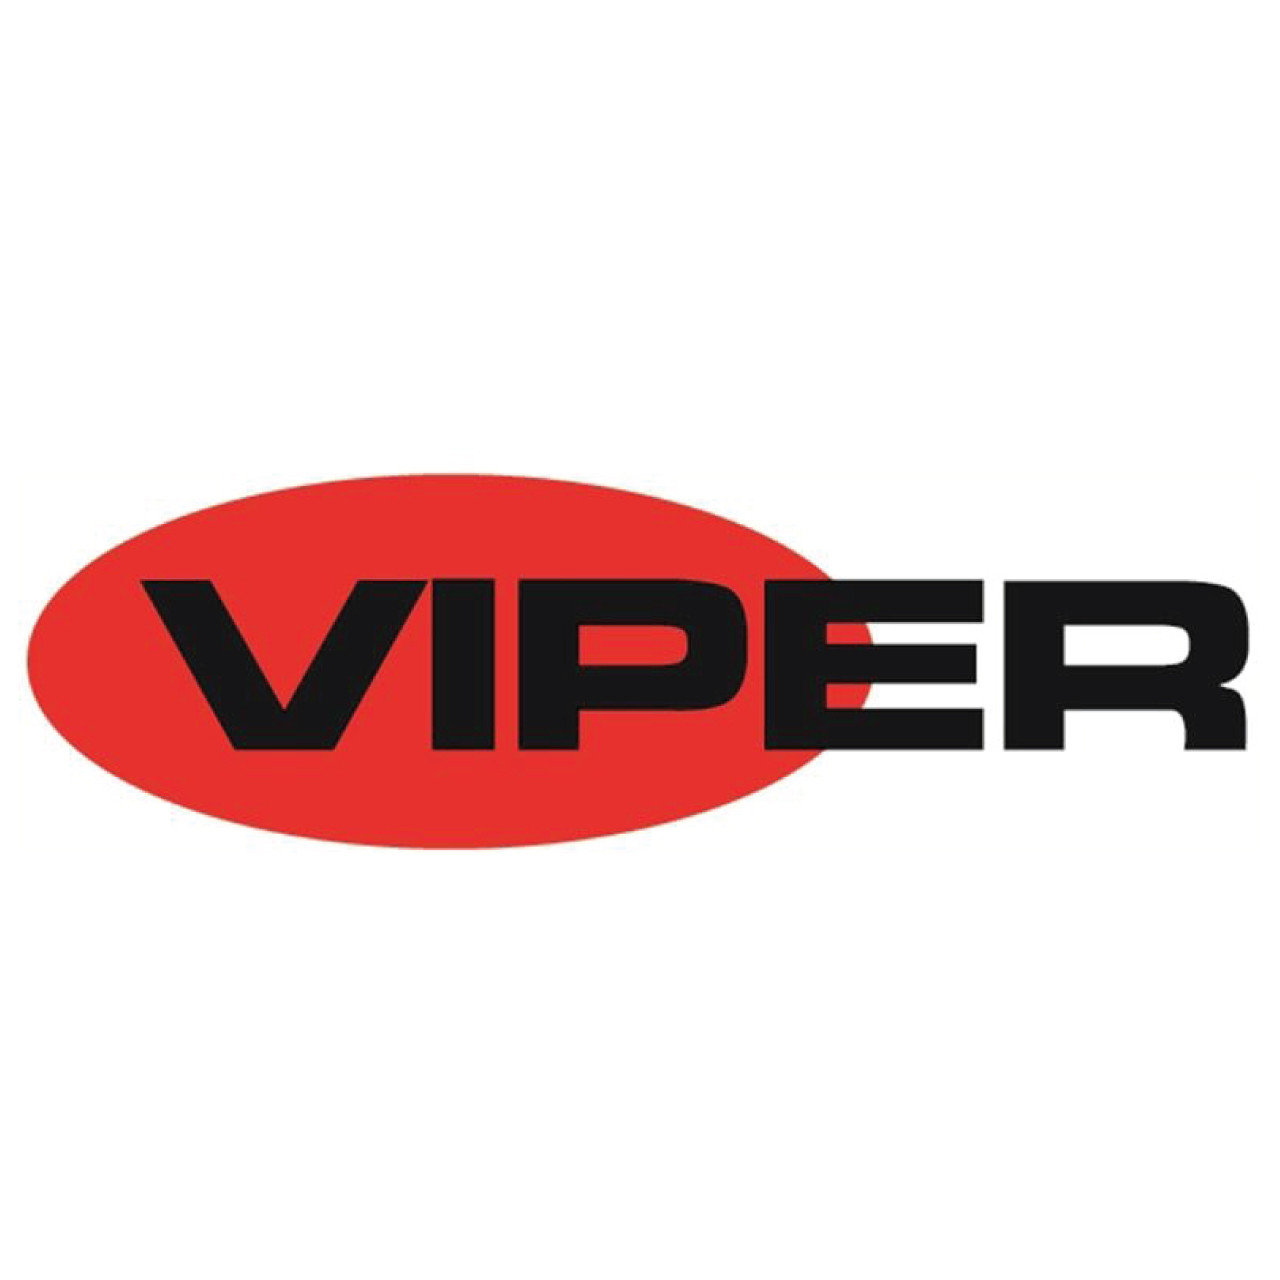 VIPER EQUIPMENT PART # 4556001033 KIT SENSOR 4083901890 W/CABLE PICTURE